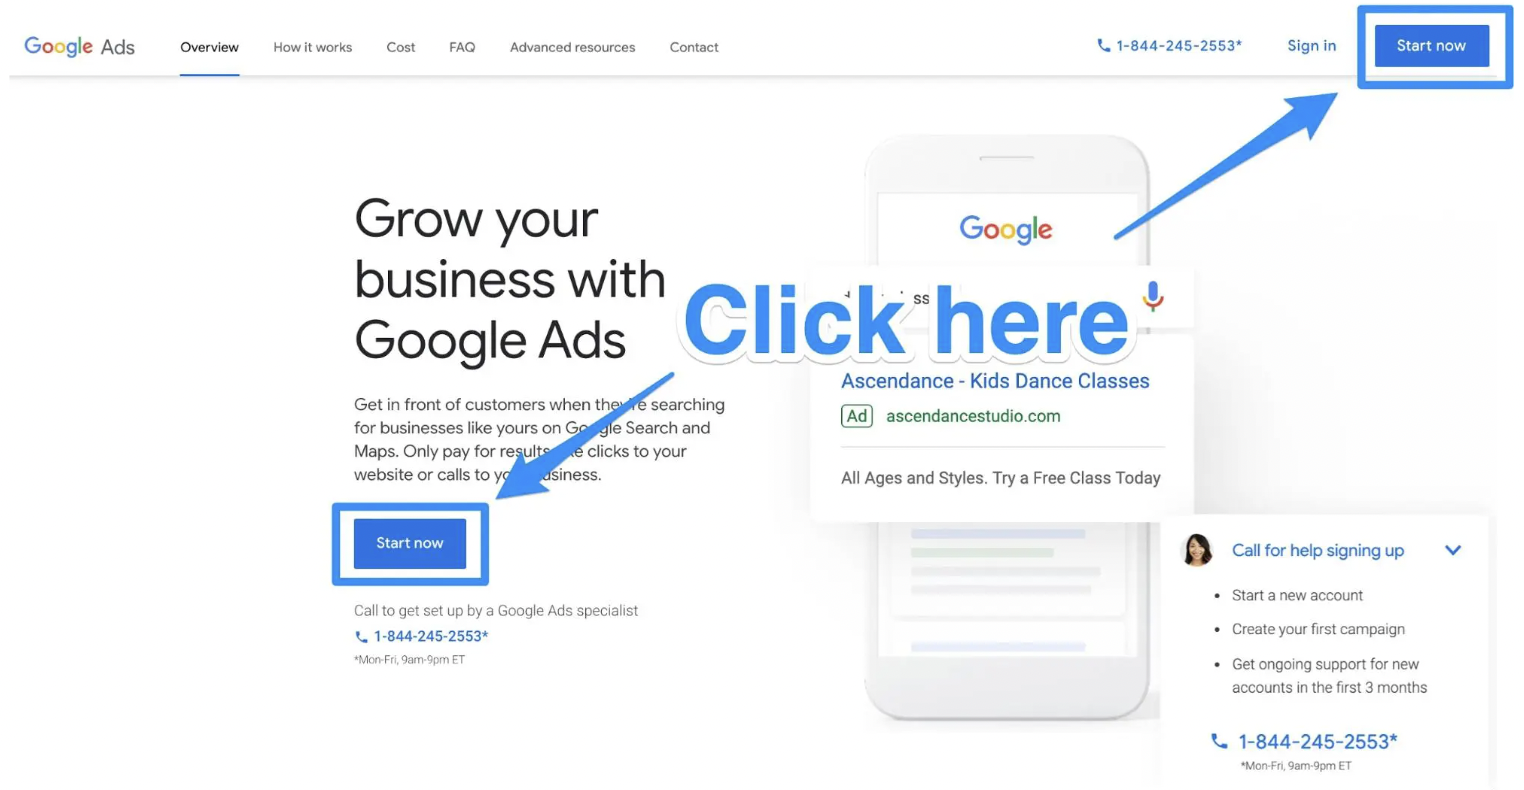 Google Ads homepage Start Now button